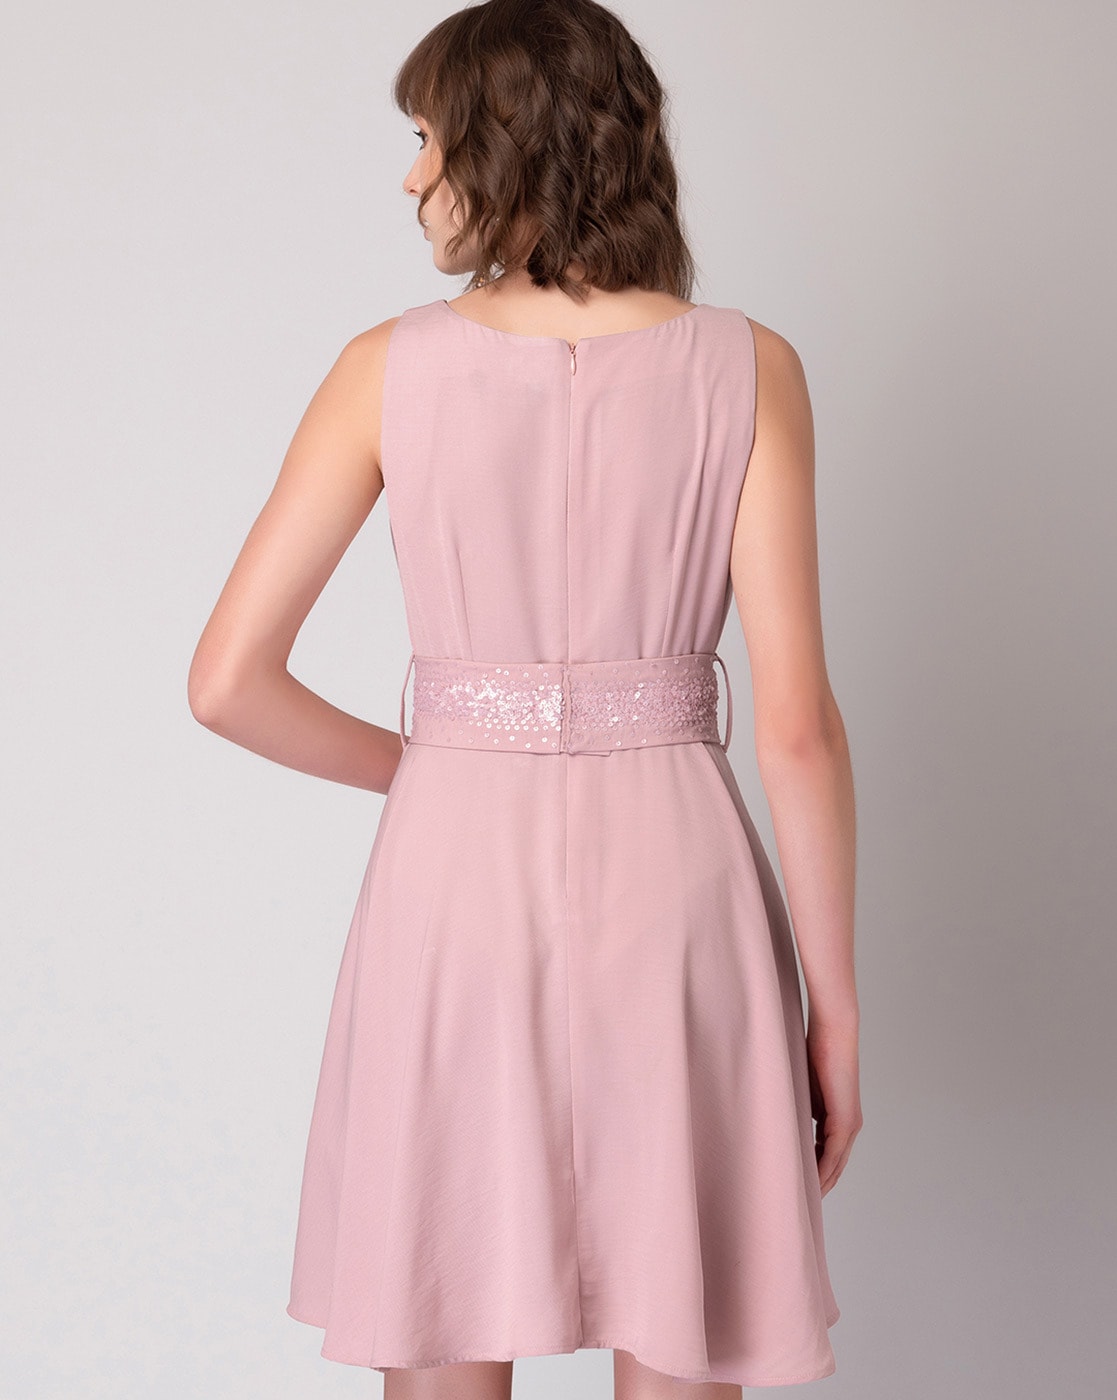 Faballey floral print maxi dress | Floral print maxi dress, Maxi dress,  Casual dresses